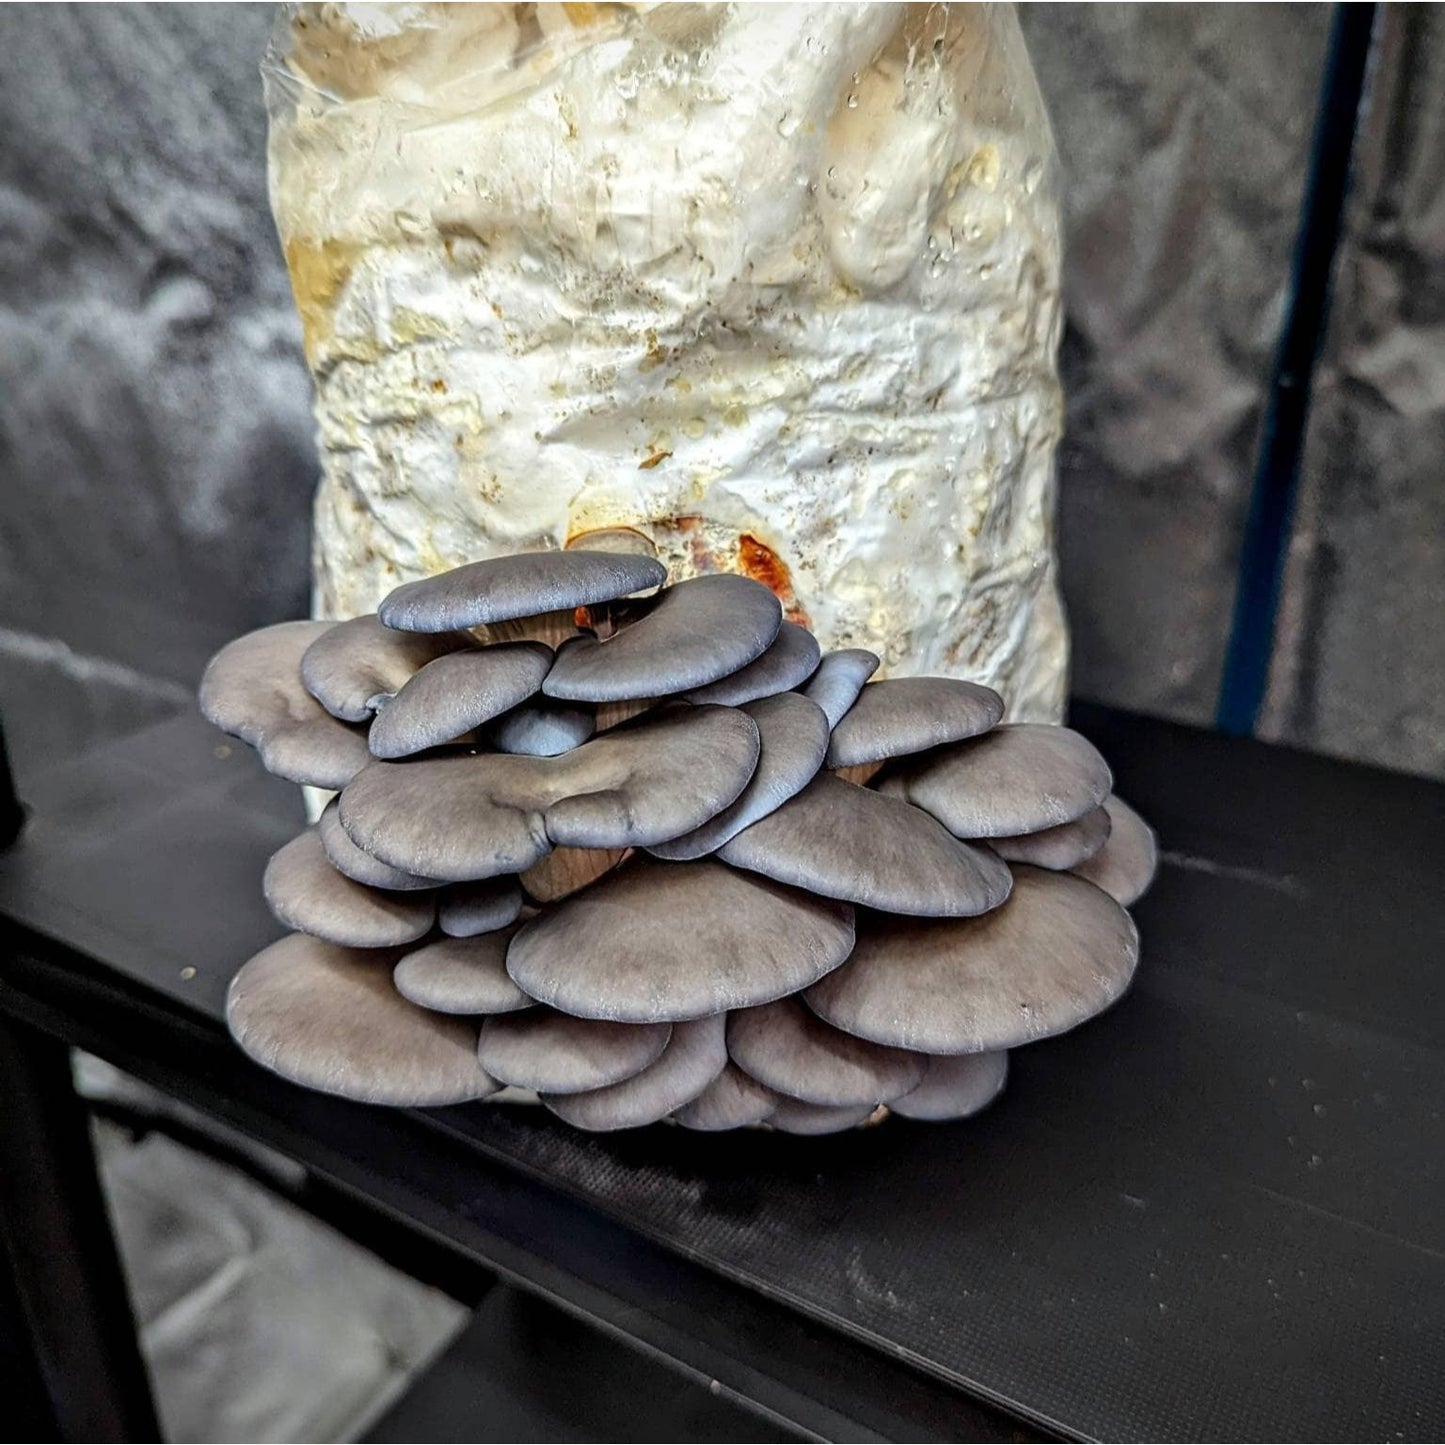 Grey Oyster Mushroom Pleurotus ostreatus